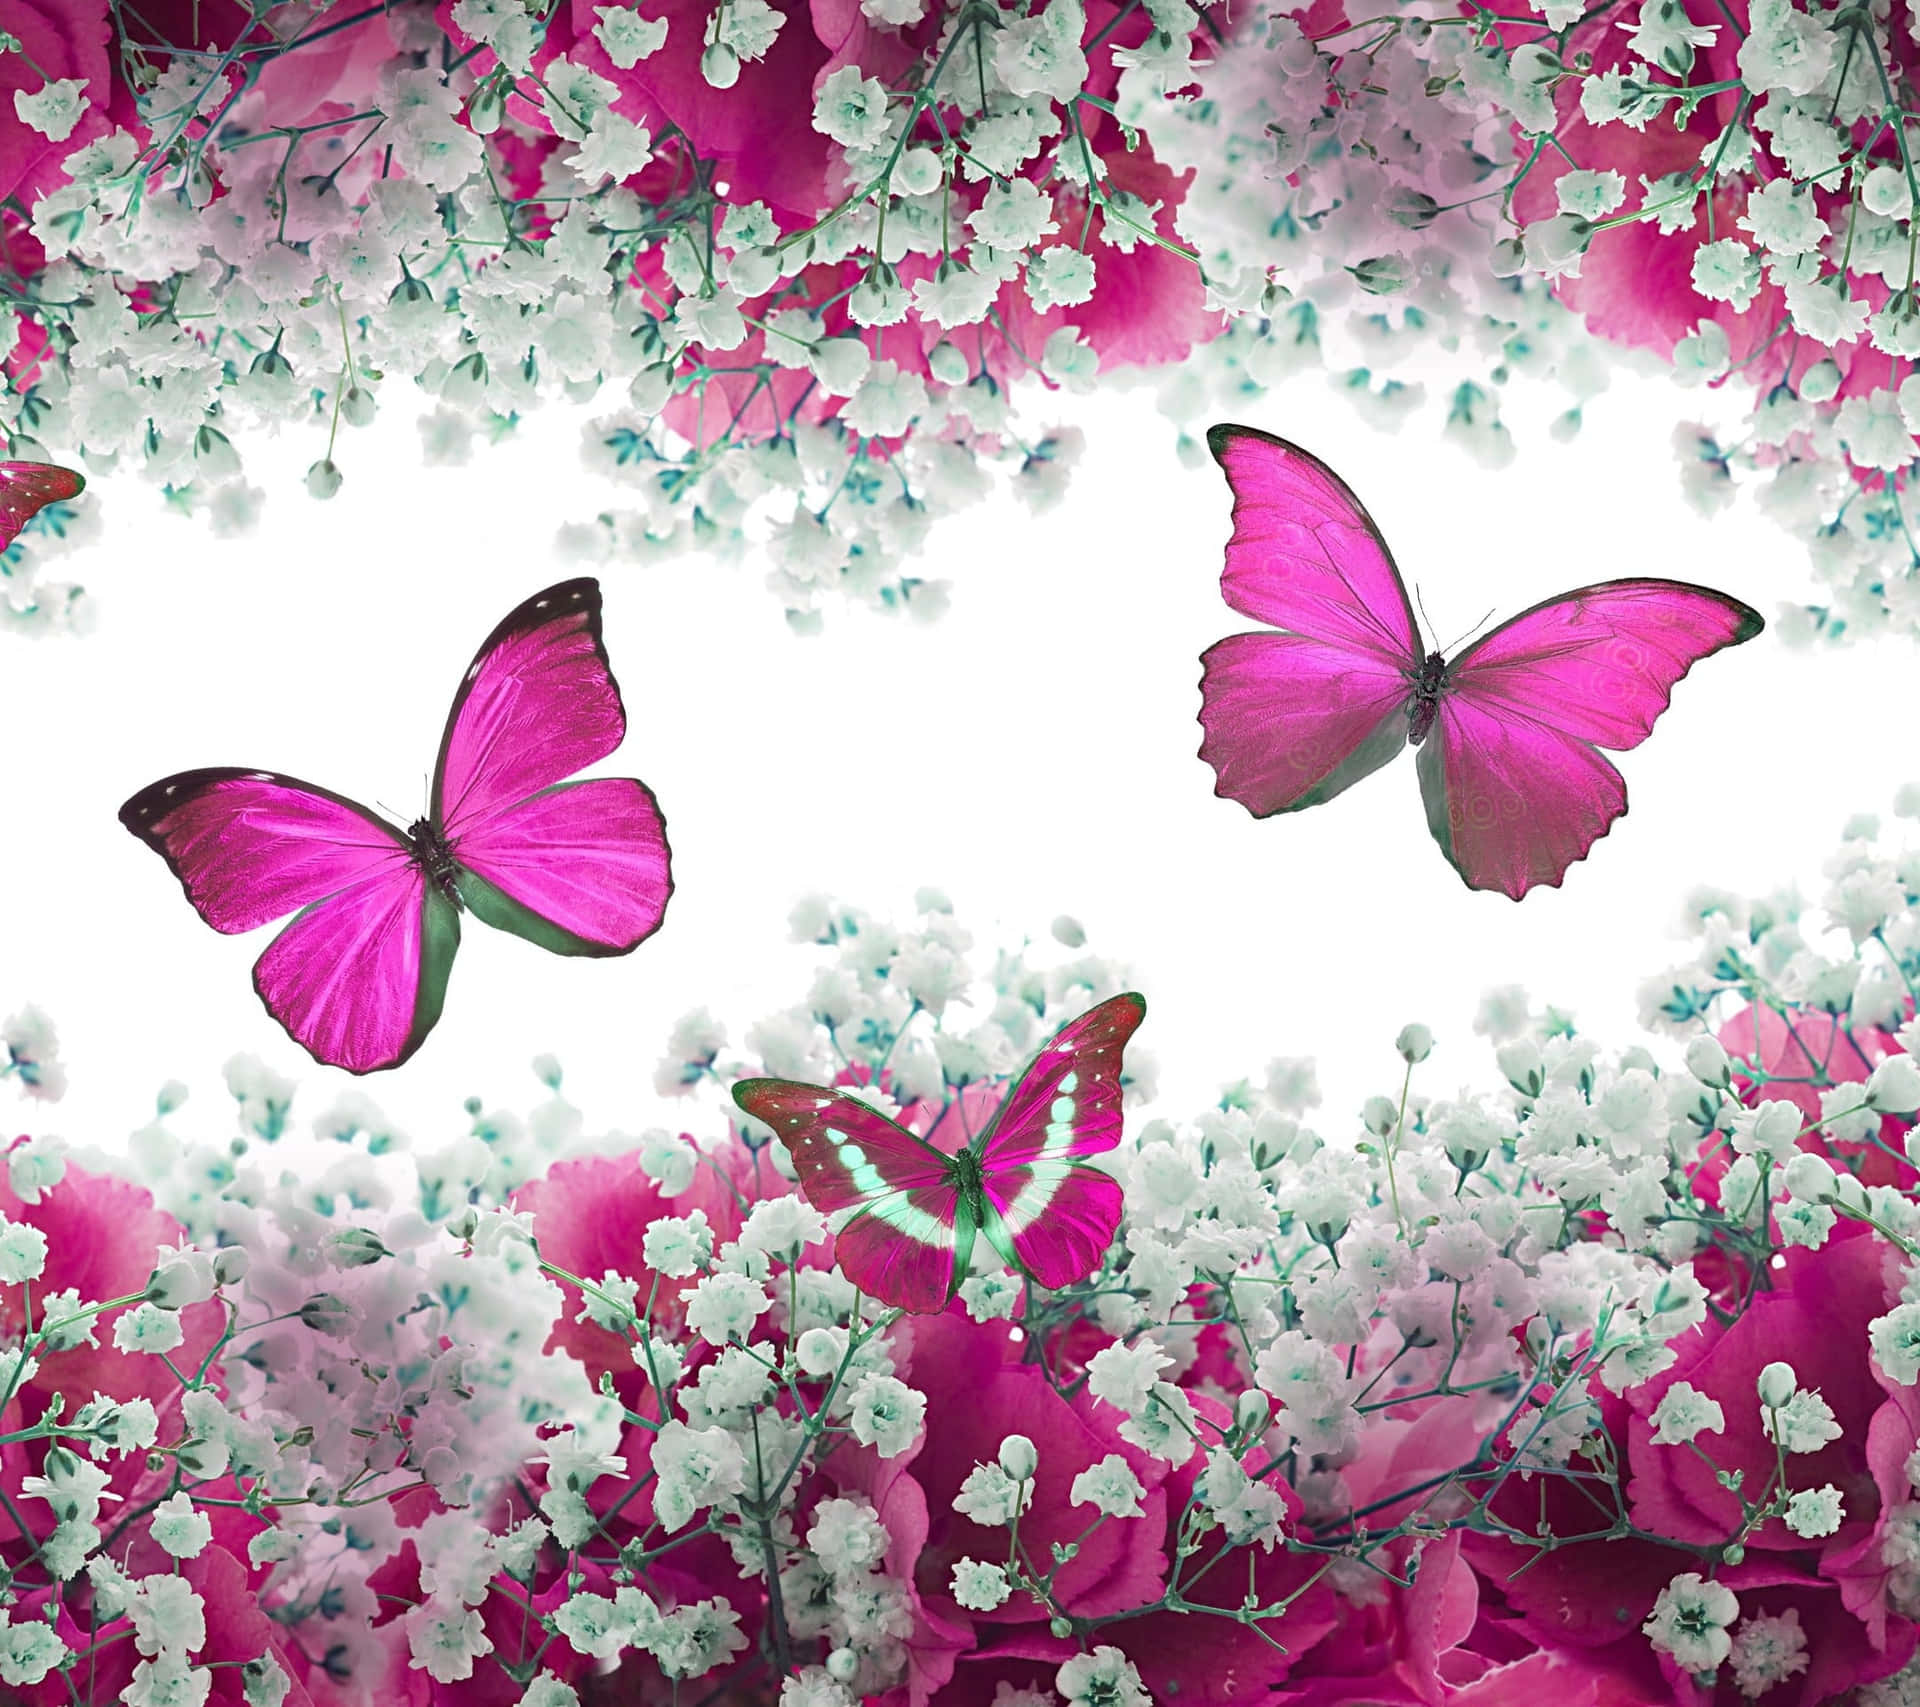 Caption: Elegant Pink Butterfly On A Soft Background